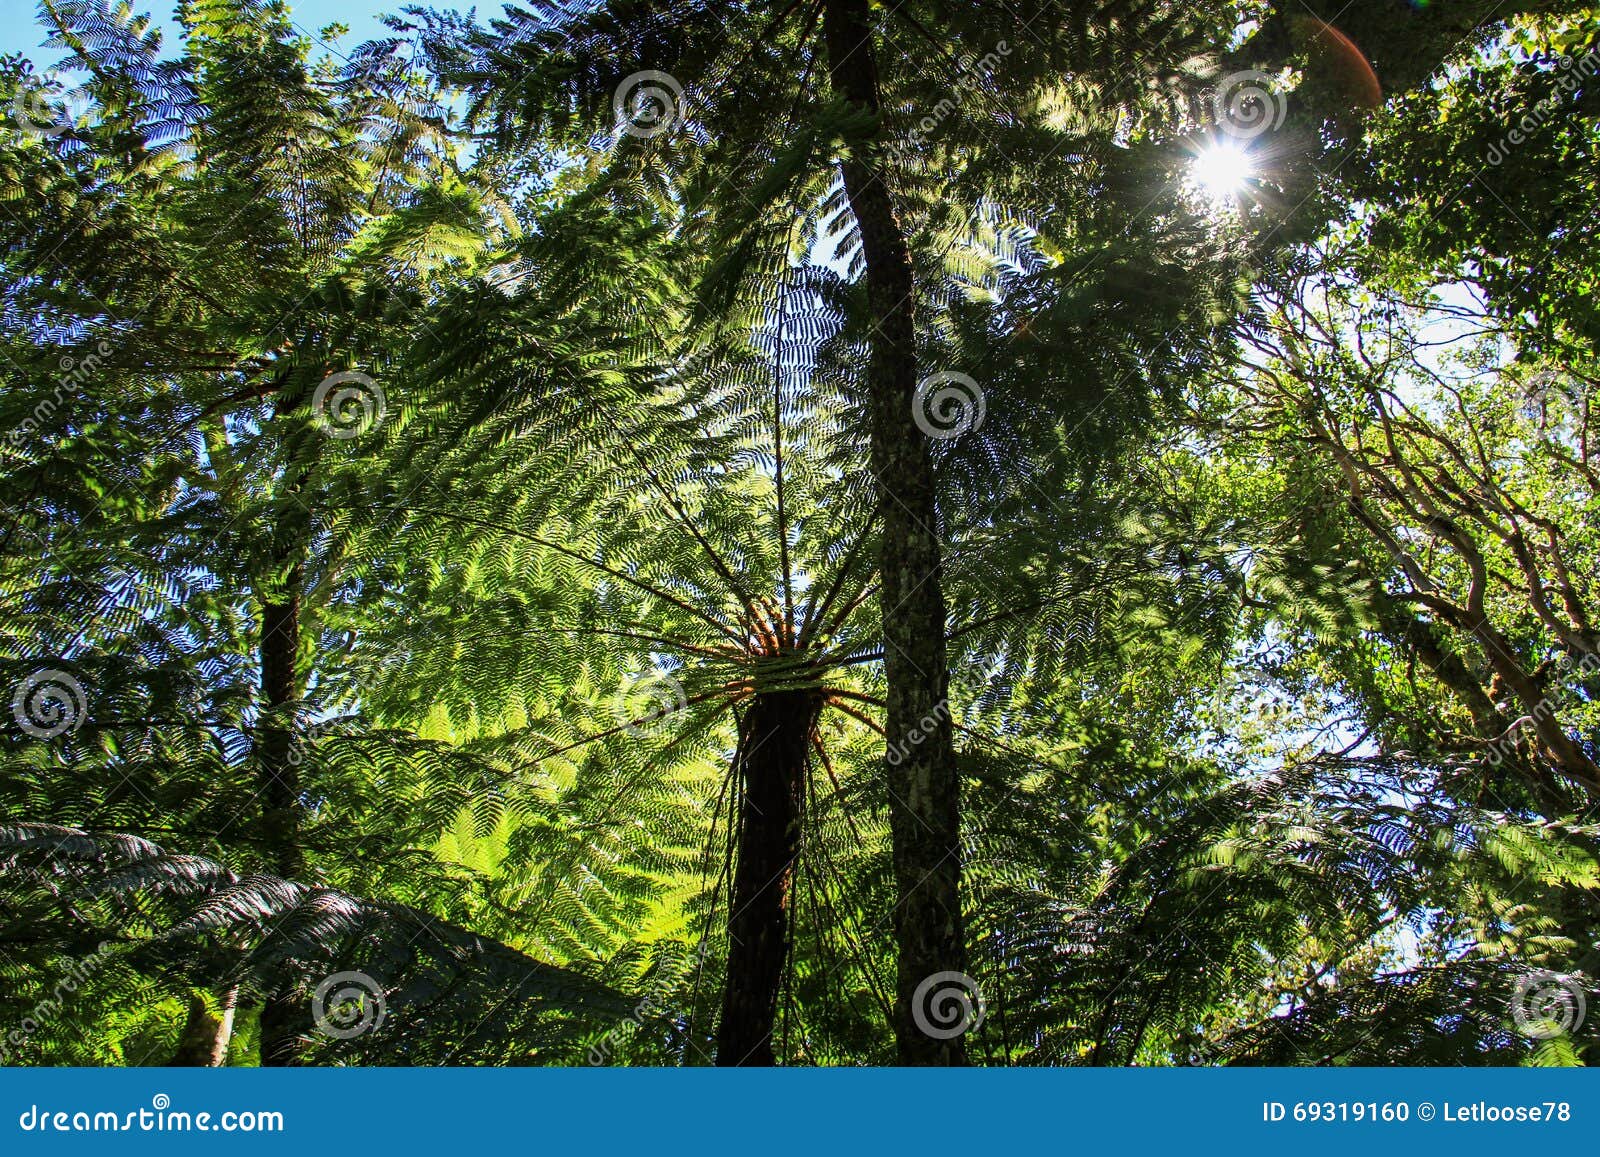 tree ferns, amboro national park, samaipata, bolivia